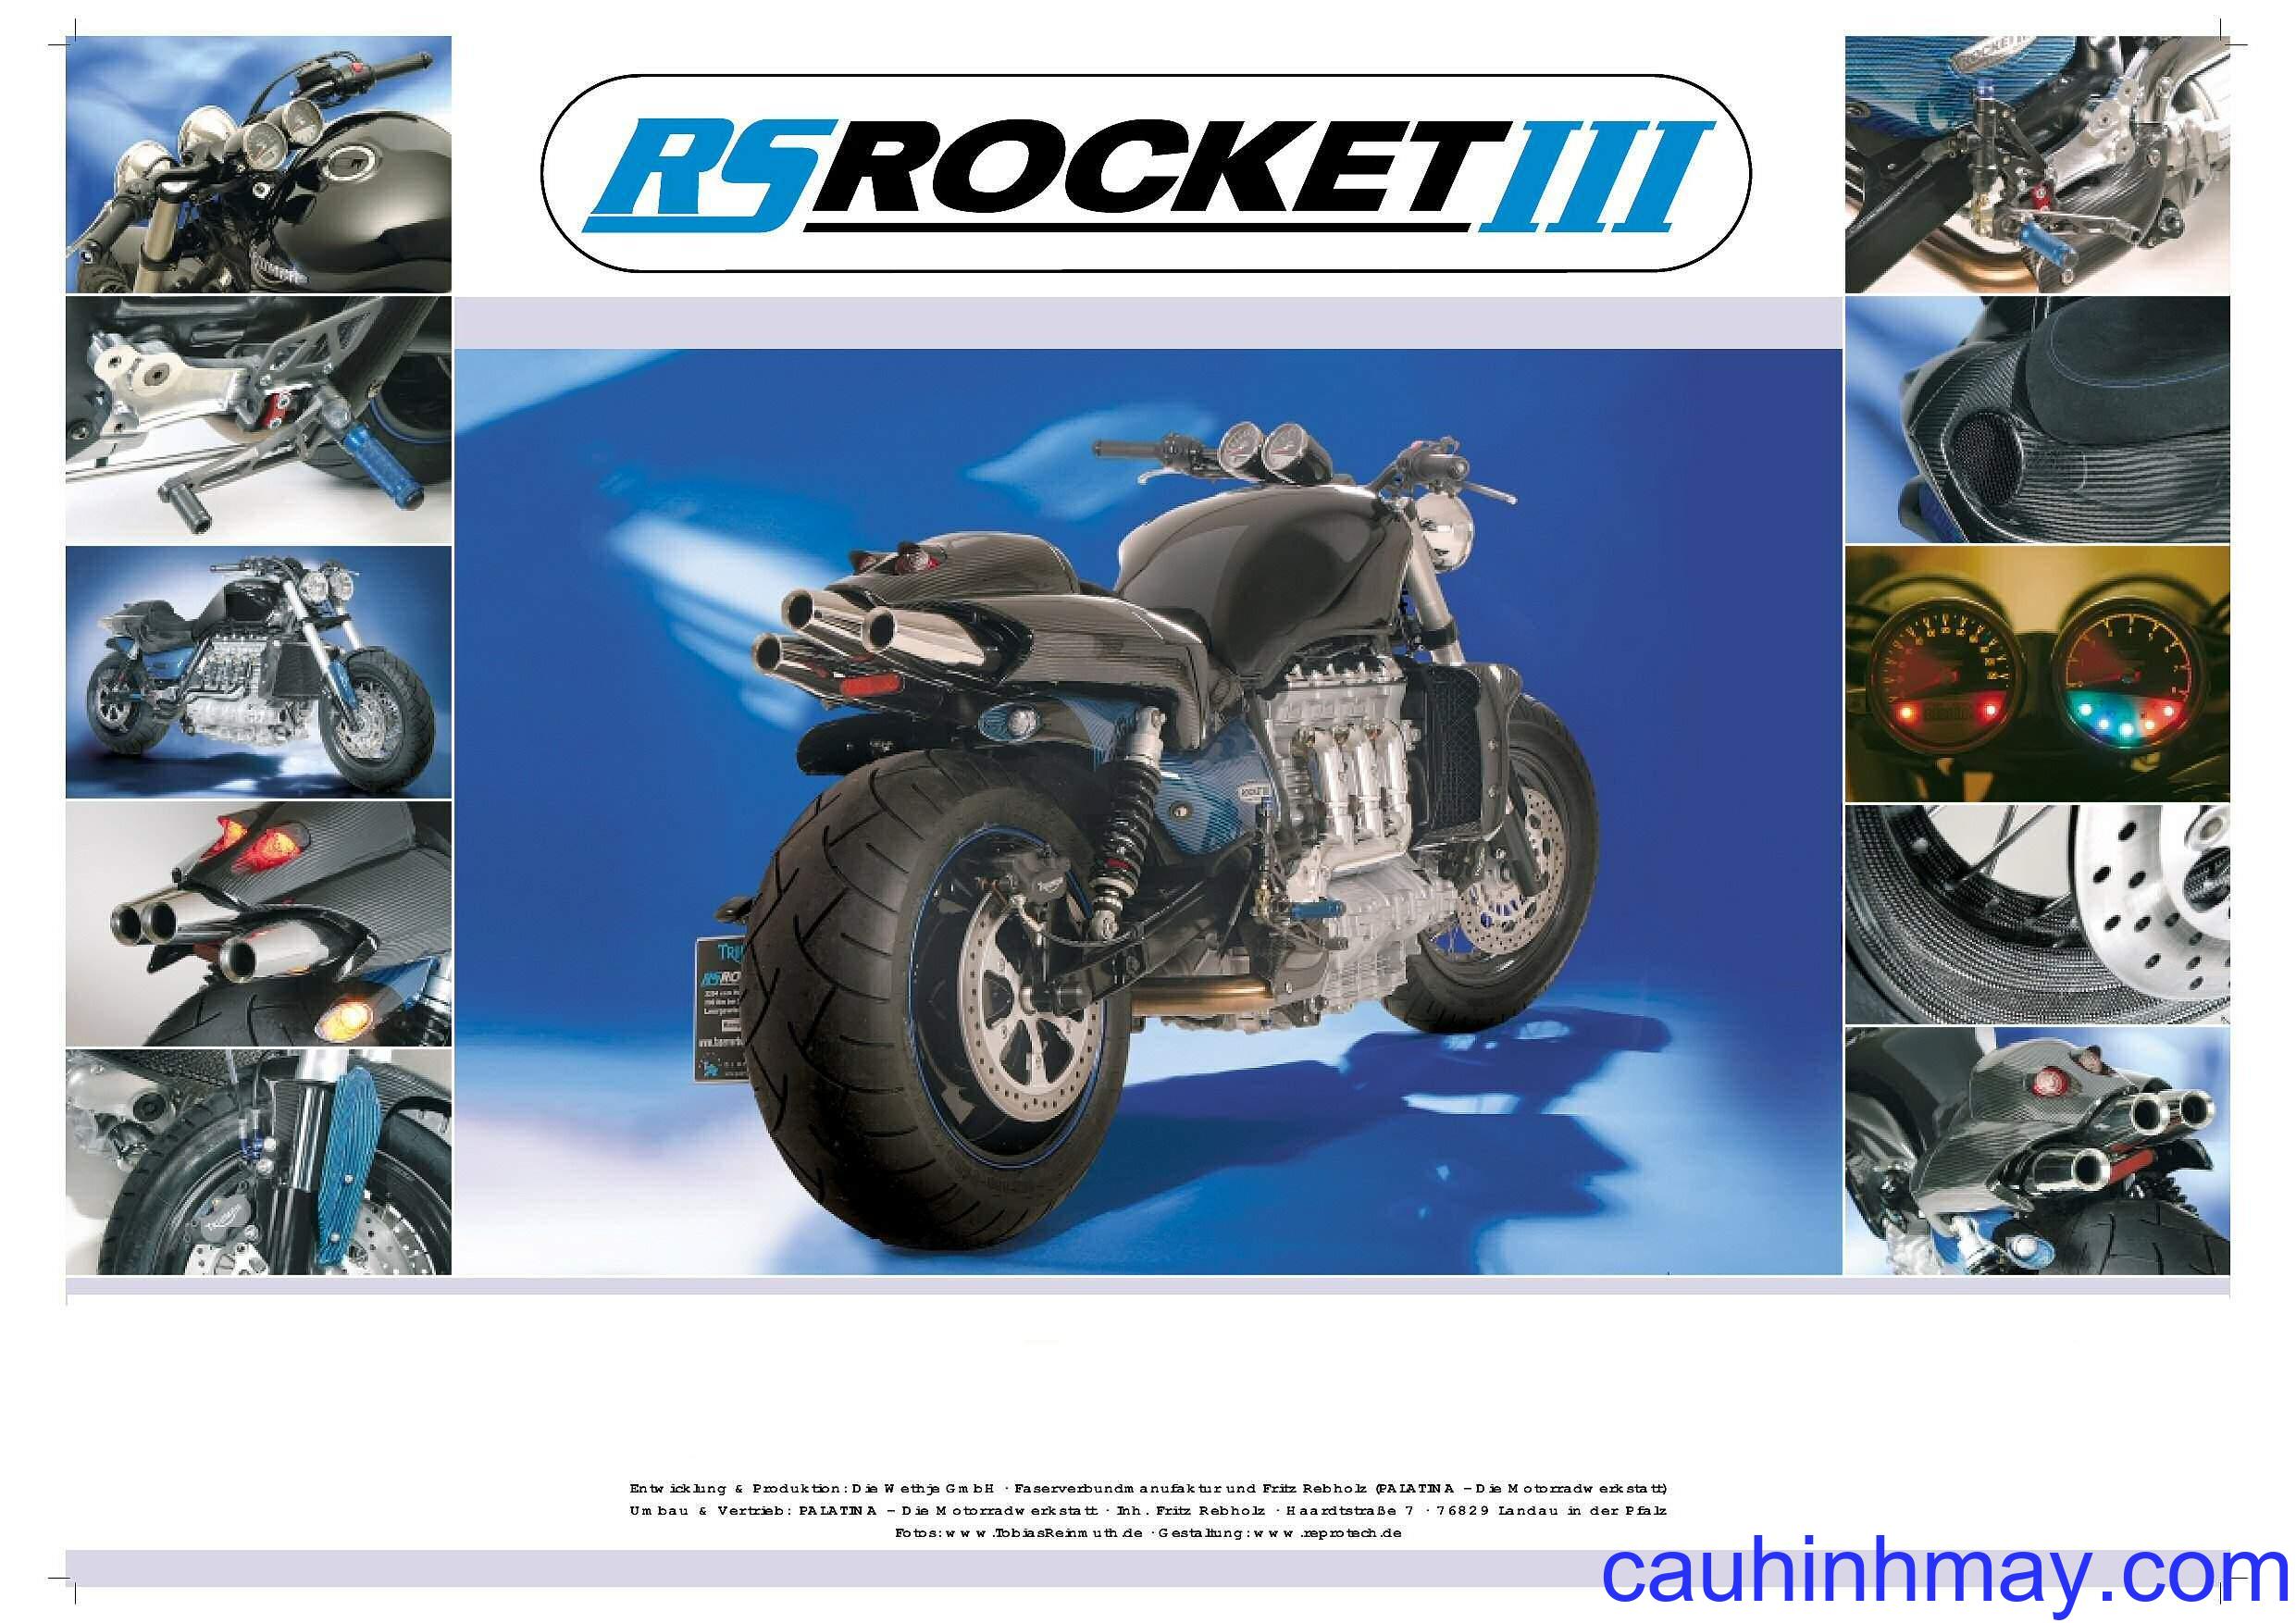 TRIUMPH ROCKET RS III PALATINA BIKE - cauhinhmay.com